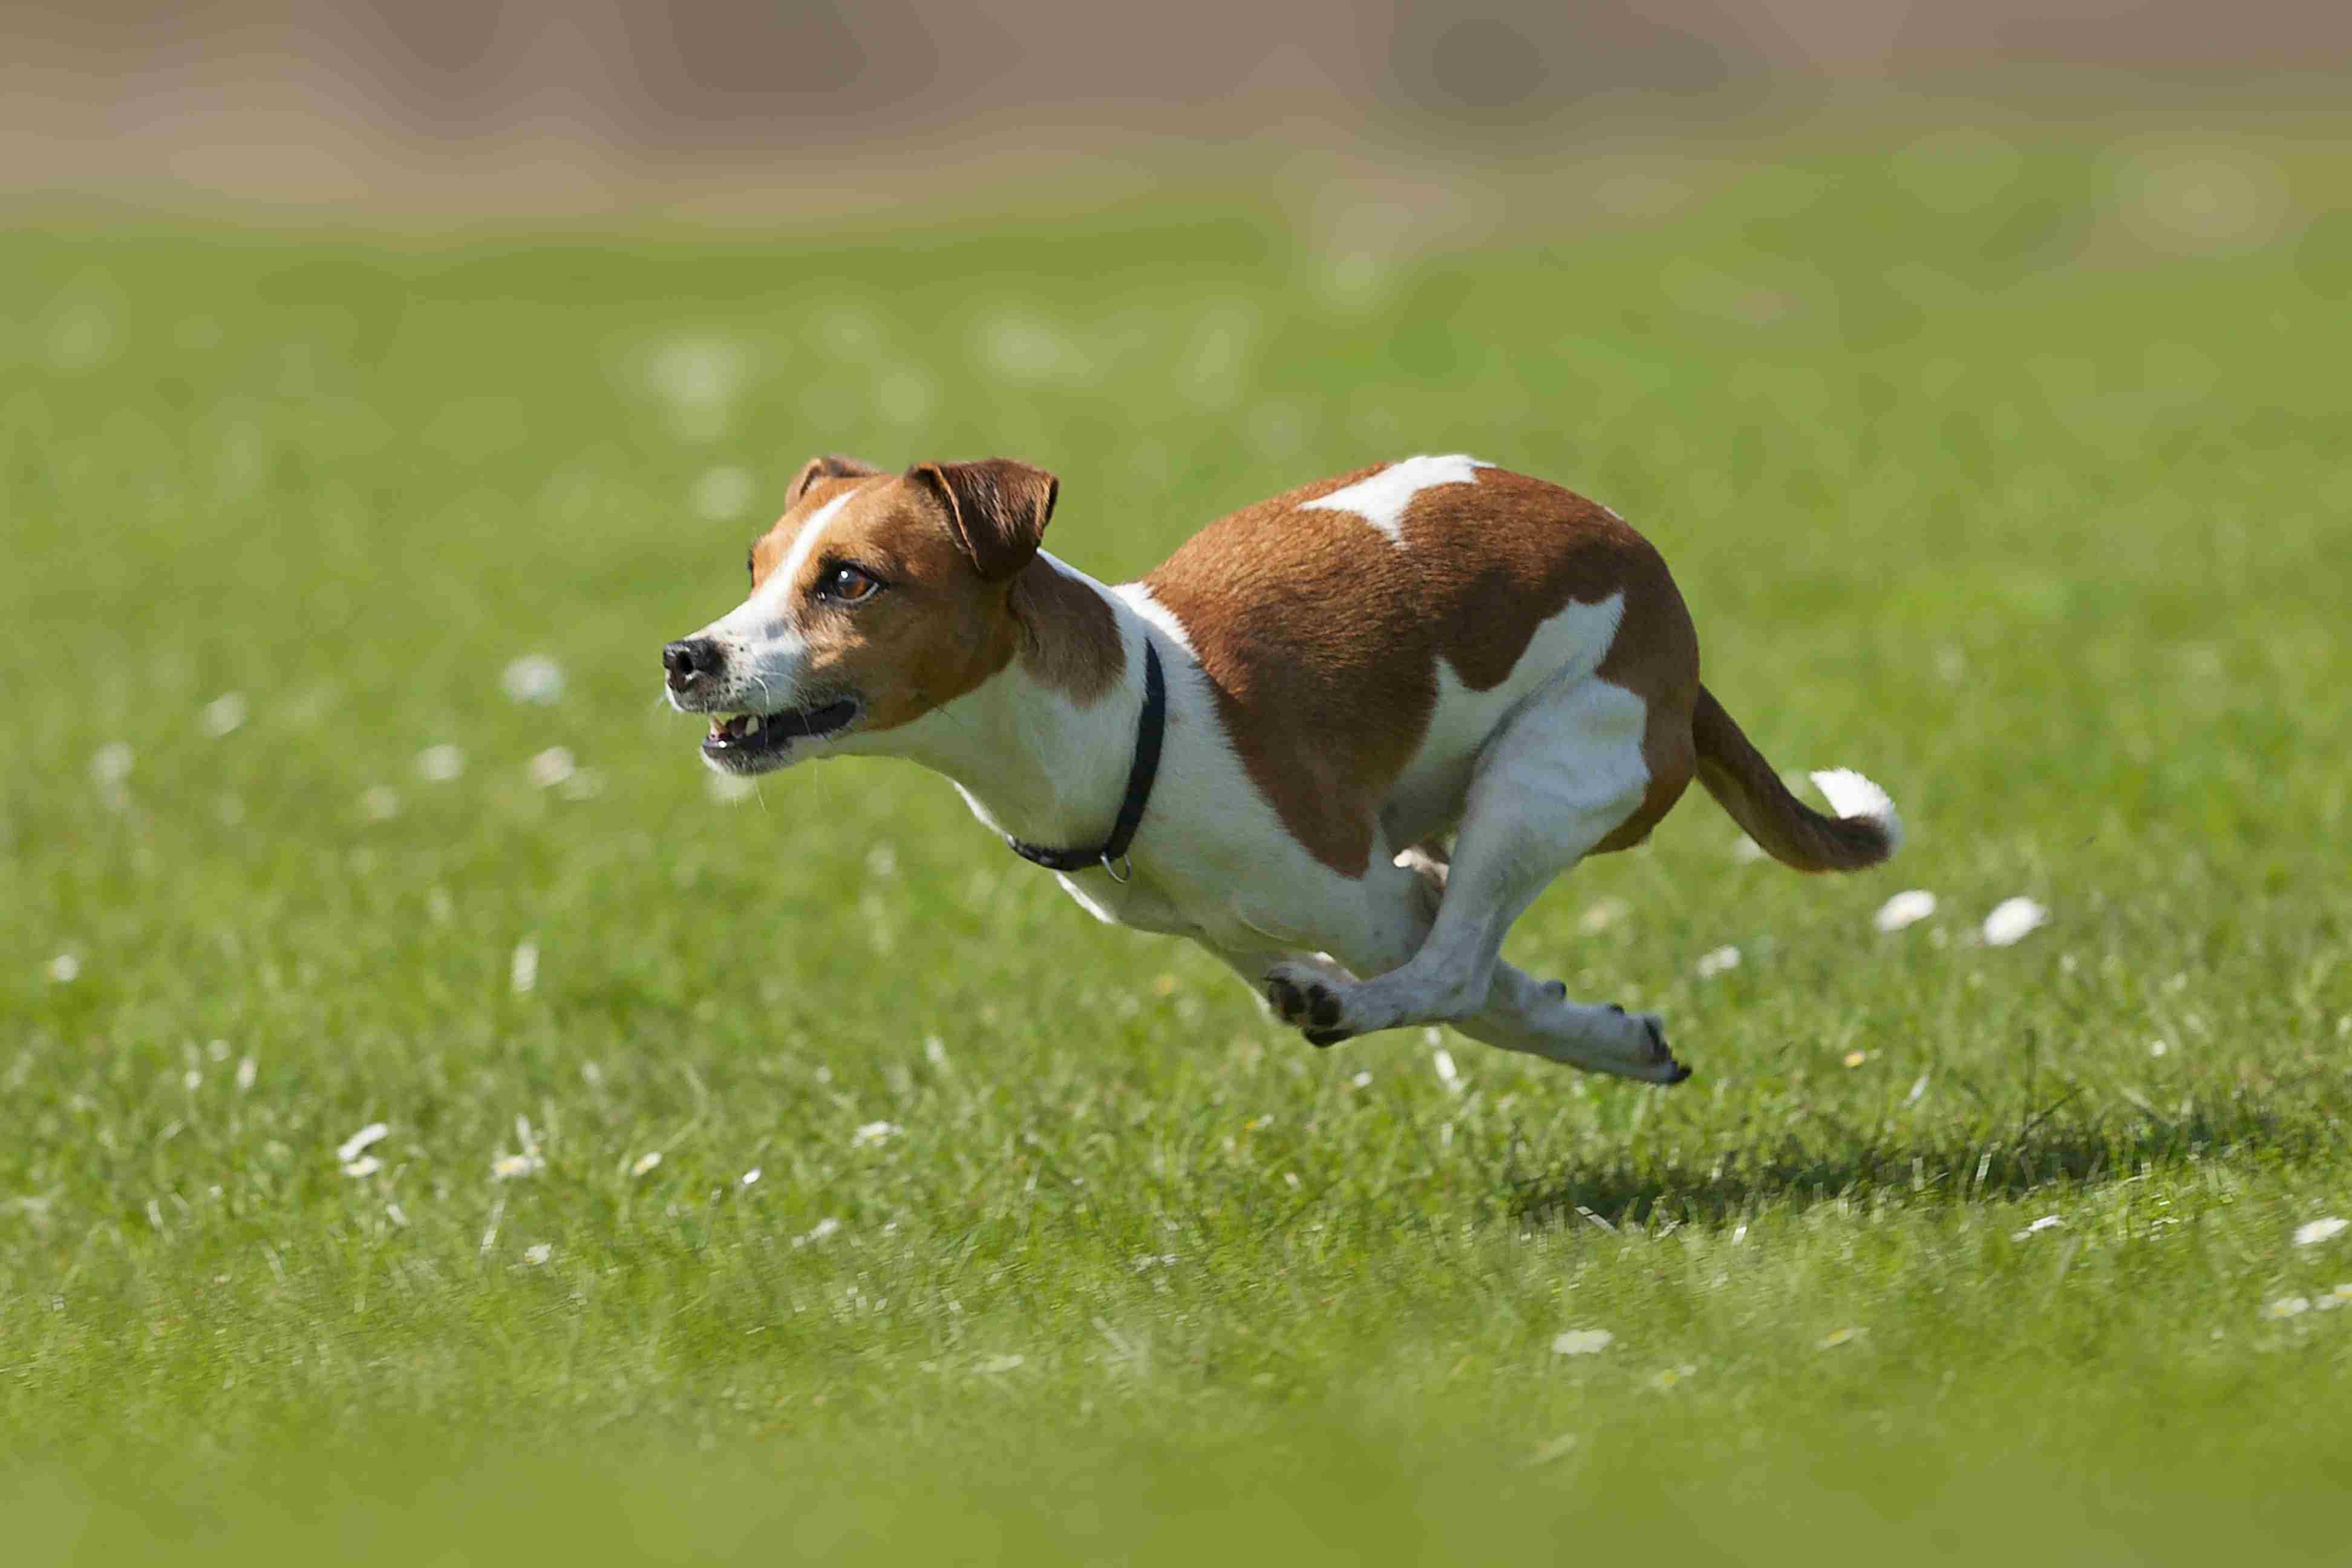 Jack Russell terrier running in grass